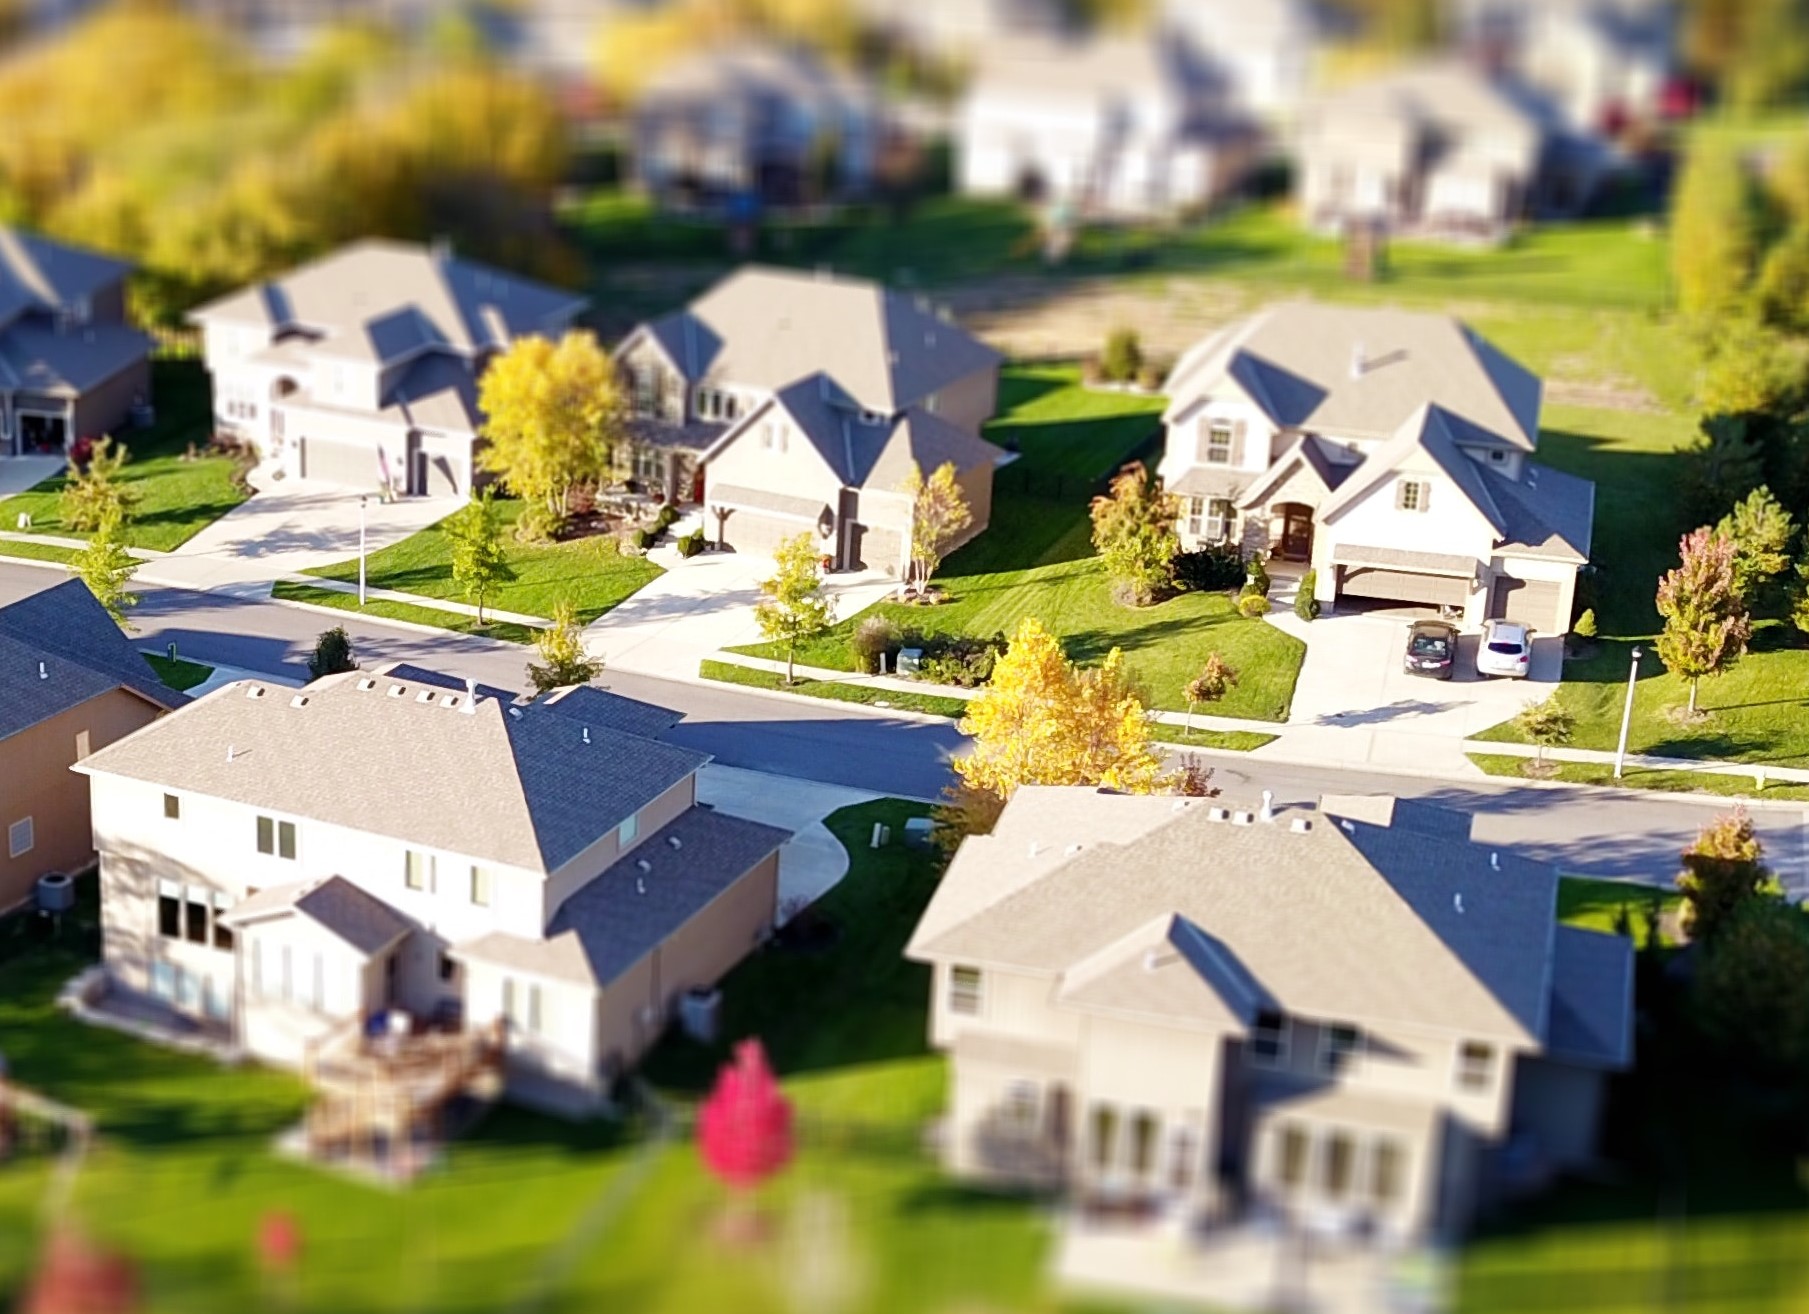 More information about "Οι περιοχές με το υψηλότερο κόστος αγοράς κατοικίας για το 2022"